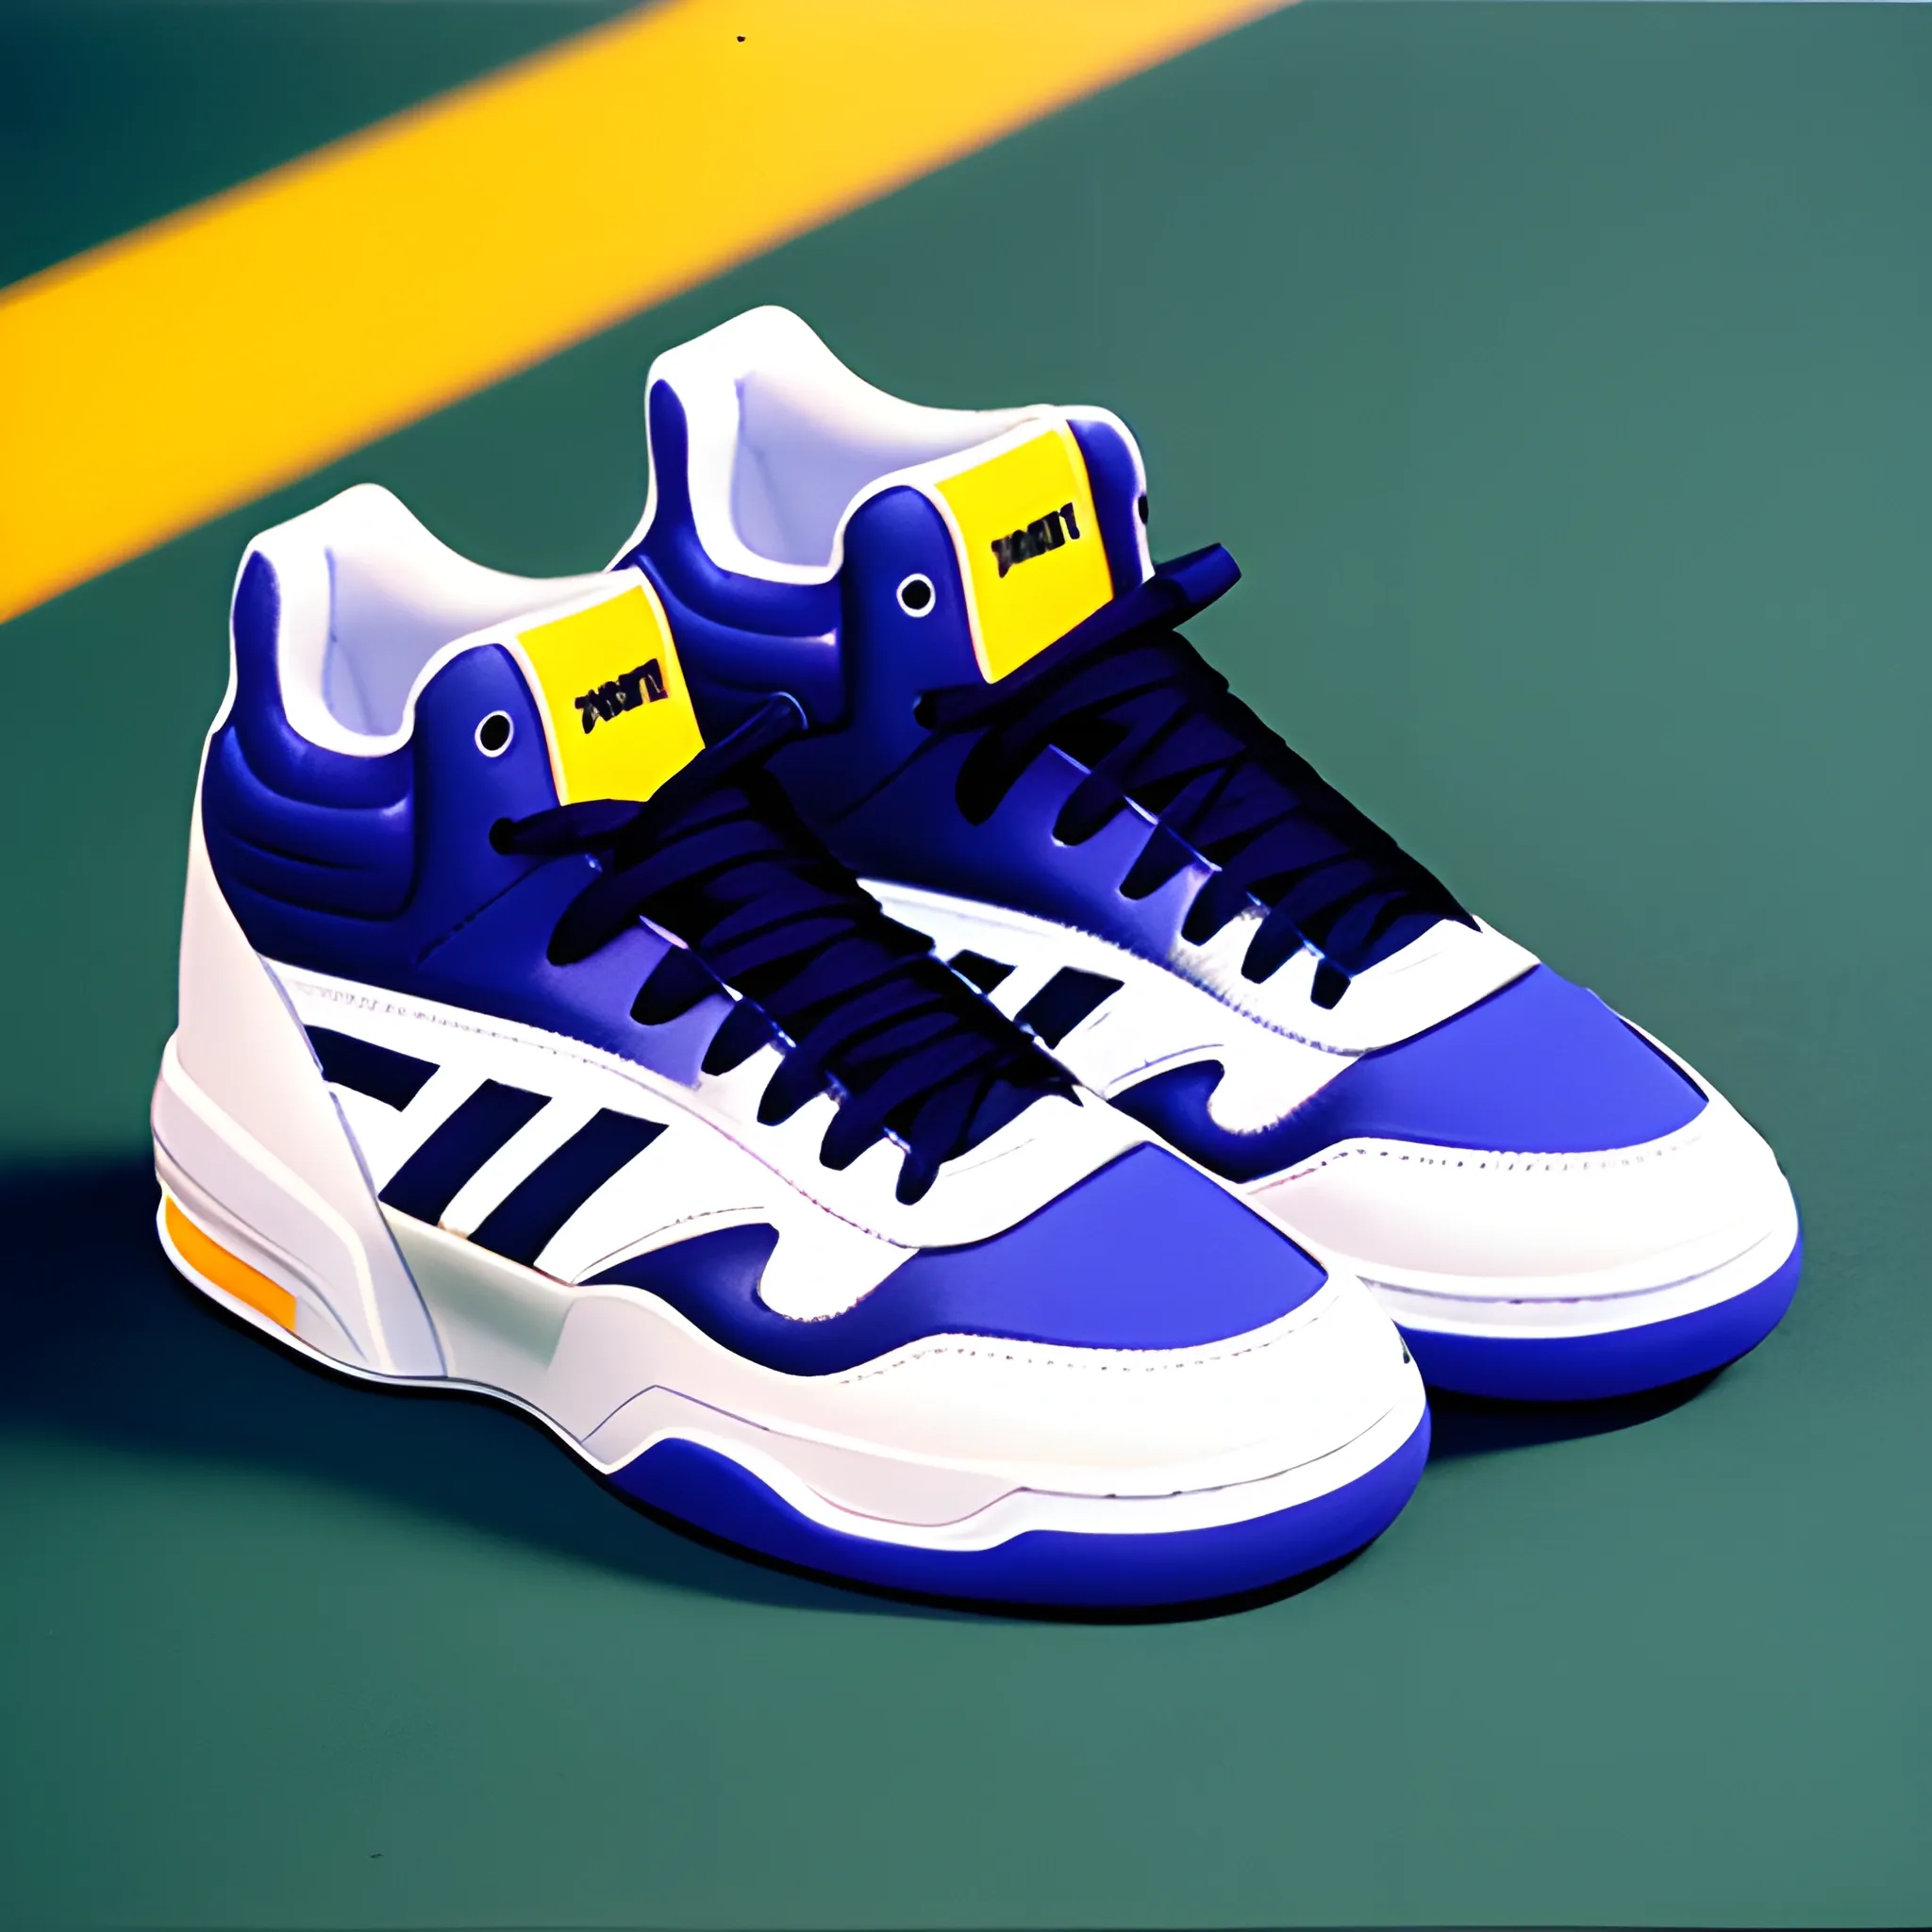 Sneaker basketball shoe 1990s